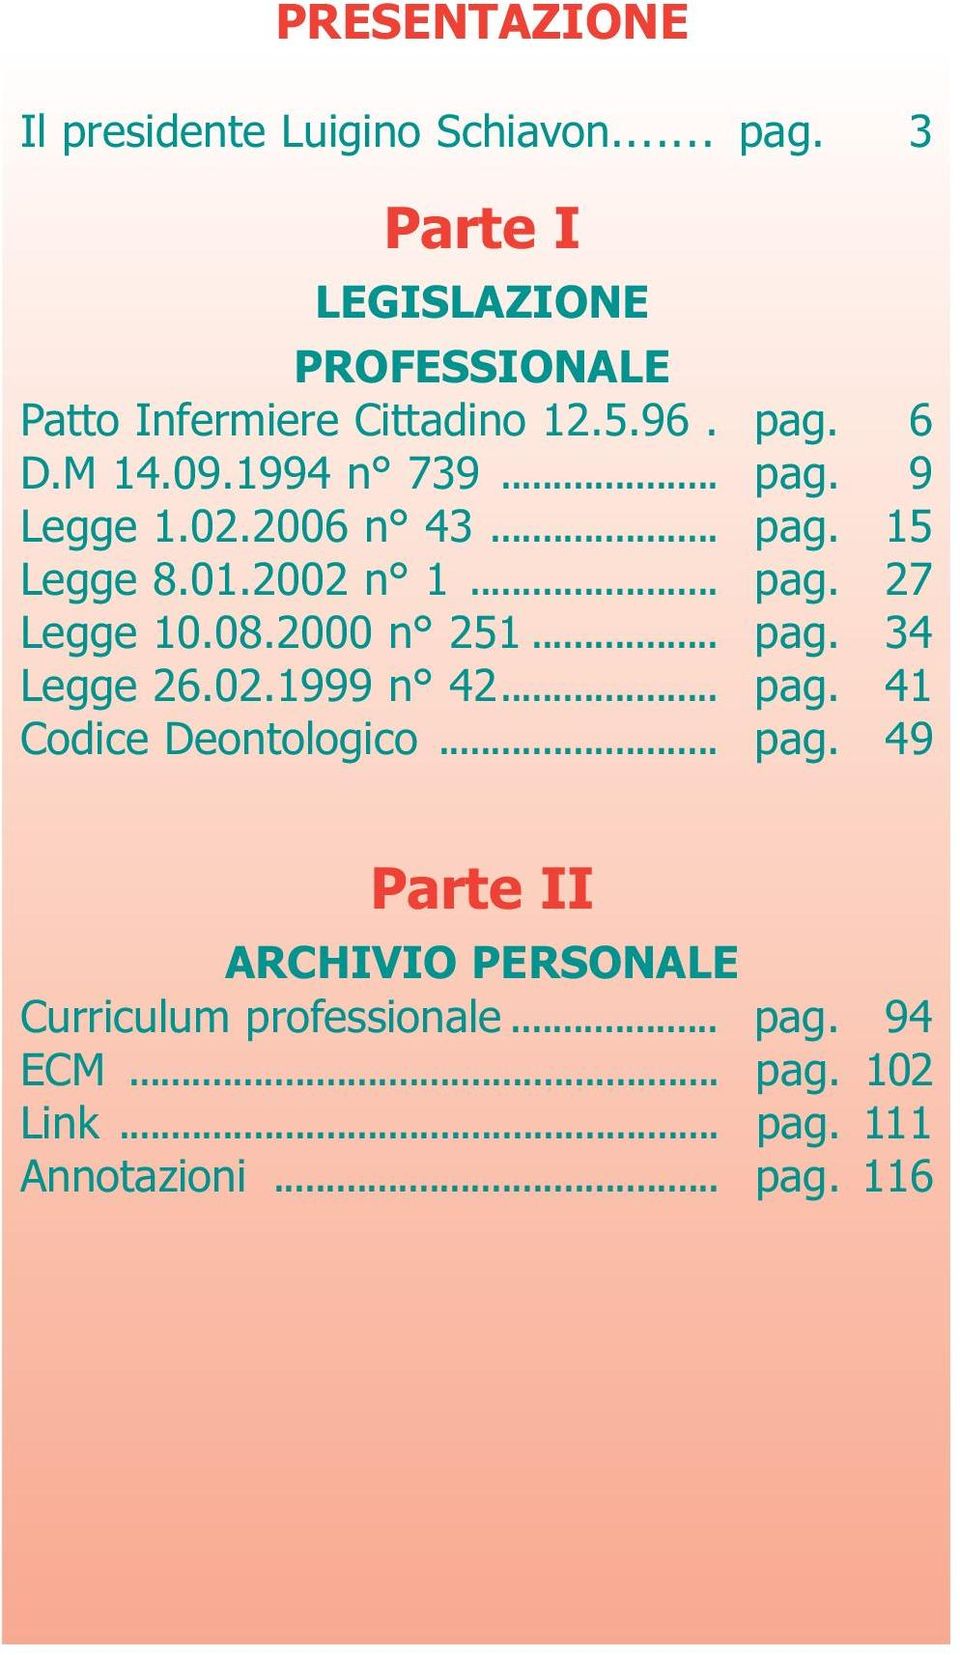 02.1999 n 42........... pag. 41 Codice Deontologico.............. pag. 49 Parte II ARCHIVIO PERSONALE Curriculum professionale.......... pag. 94 ECM.